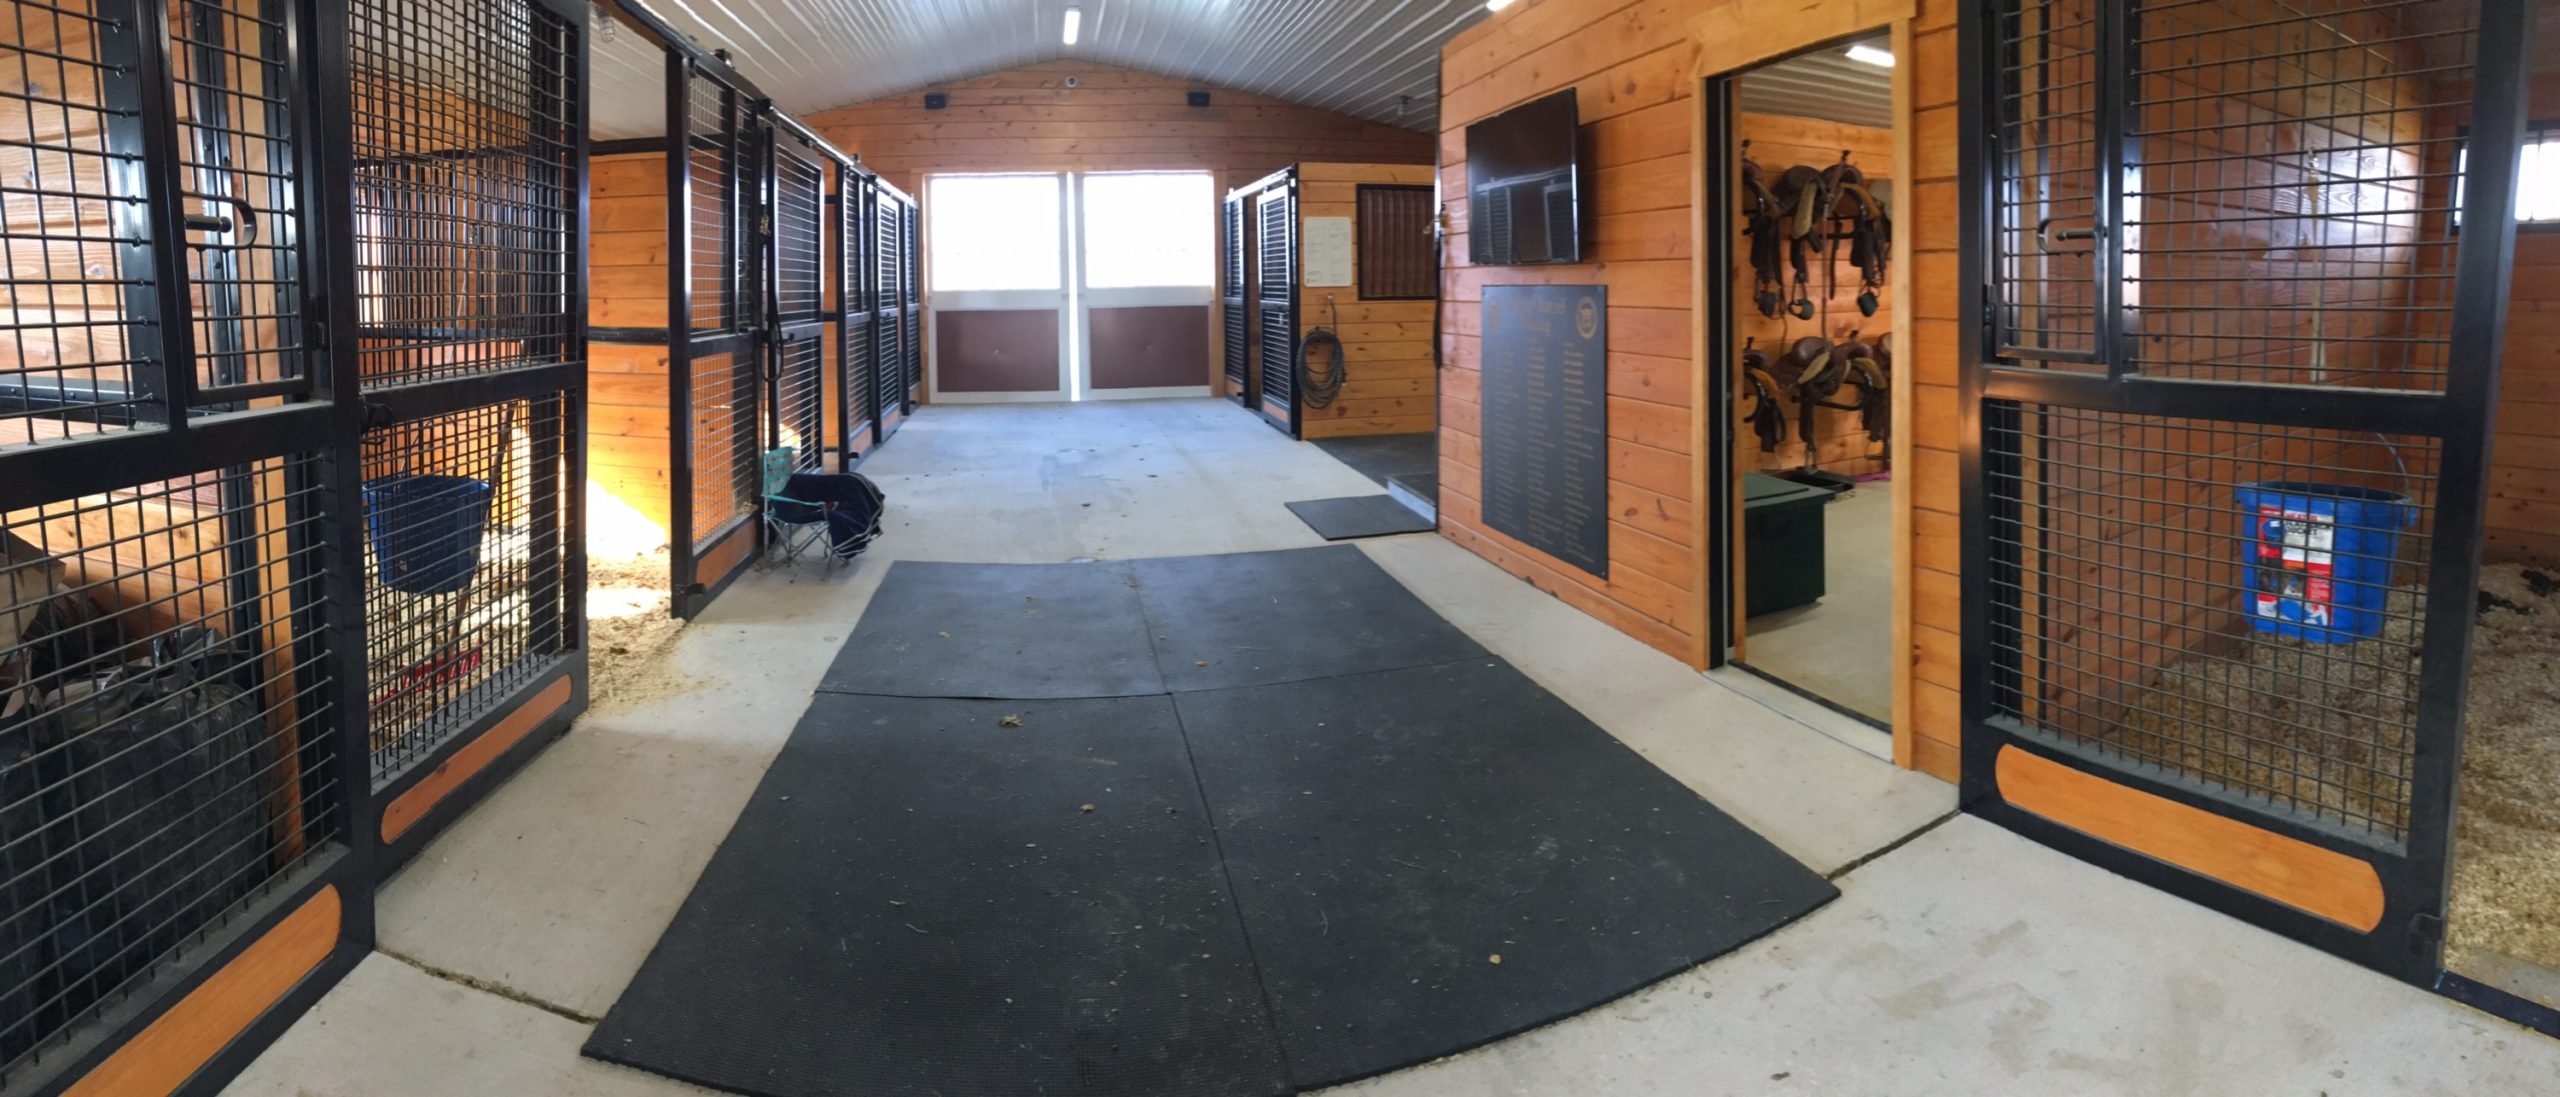 Horse barn aisle after renovation